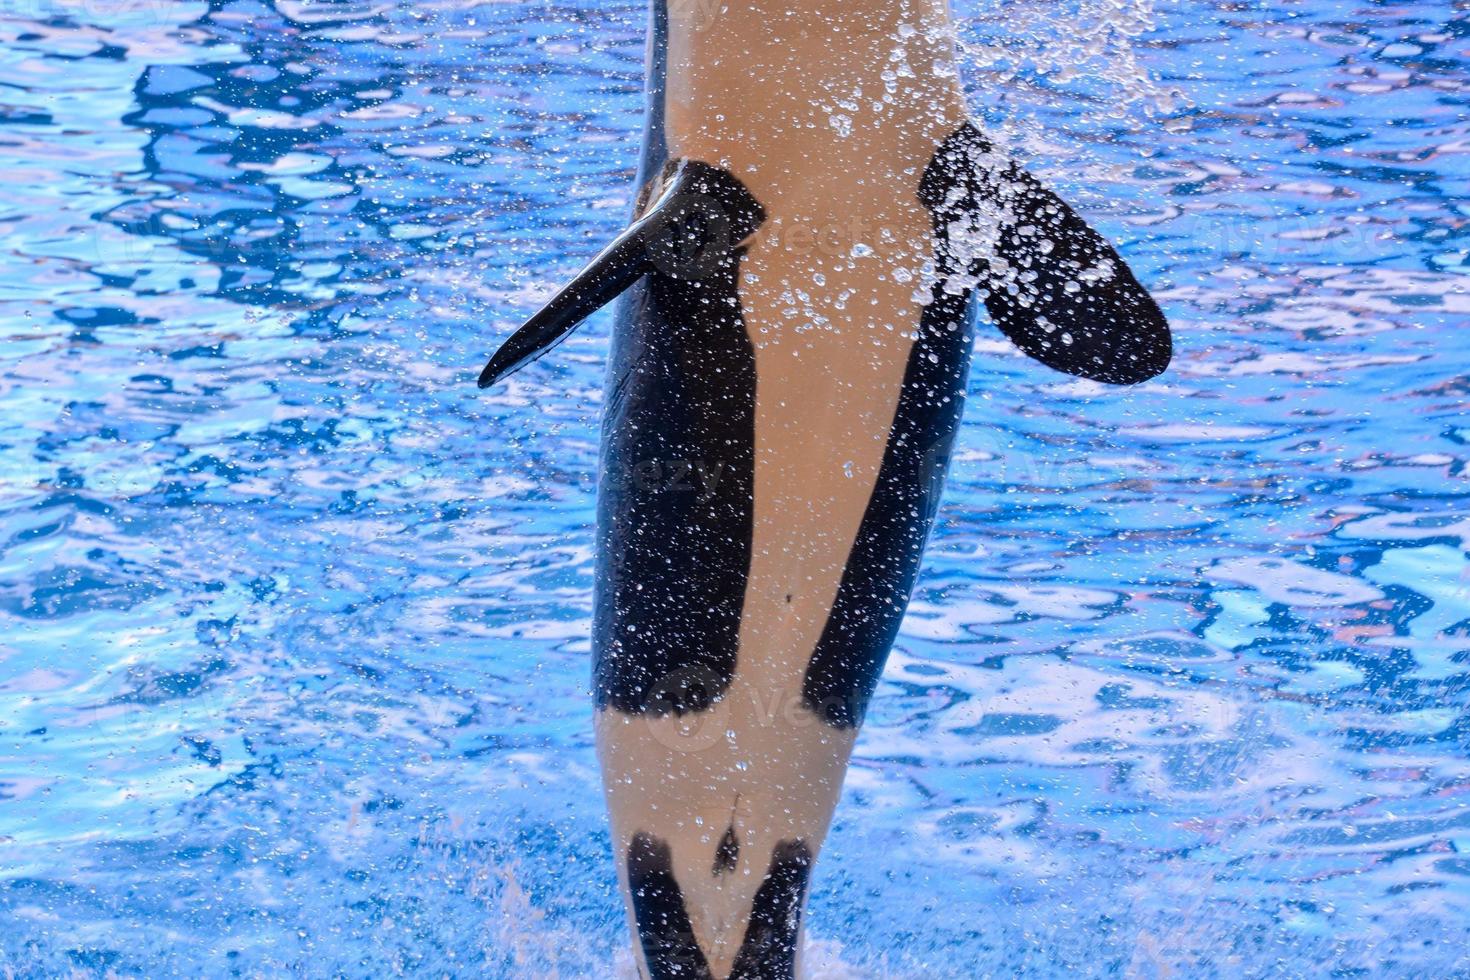 Orca whale in the zoo aquarium photo